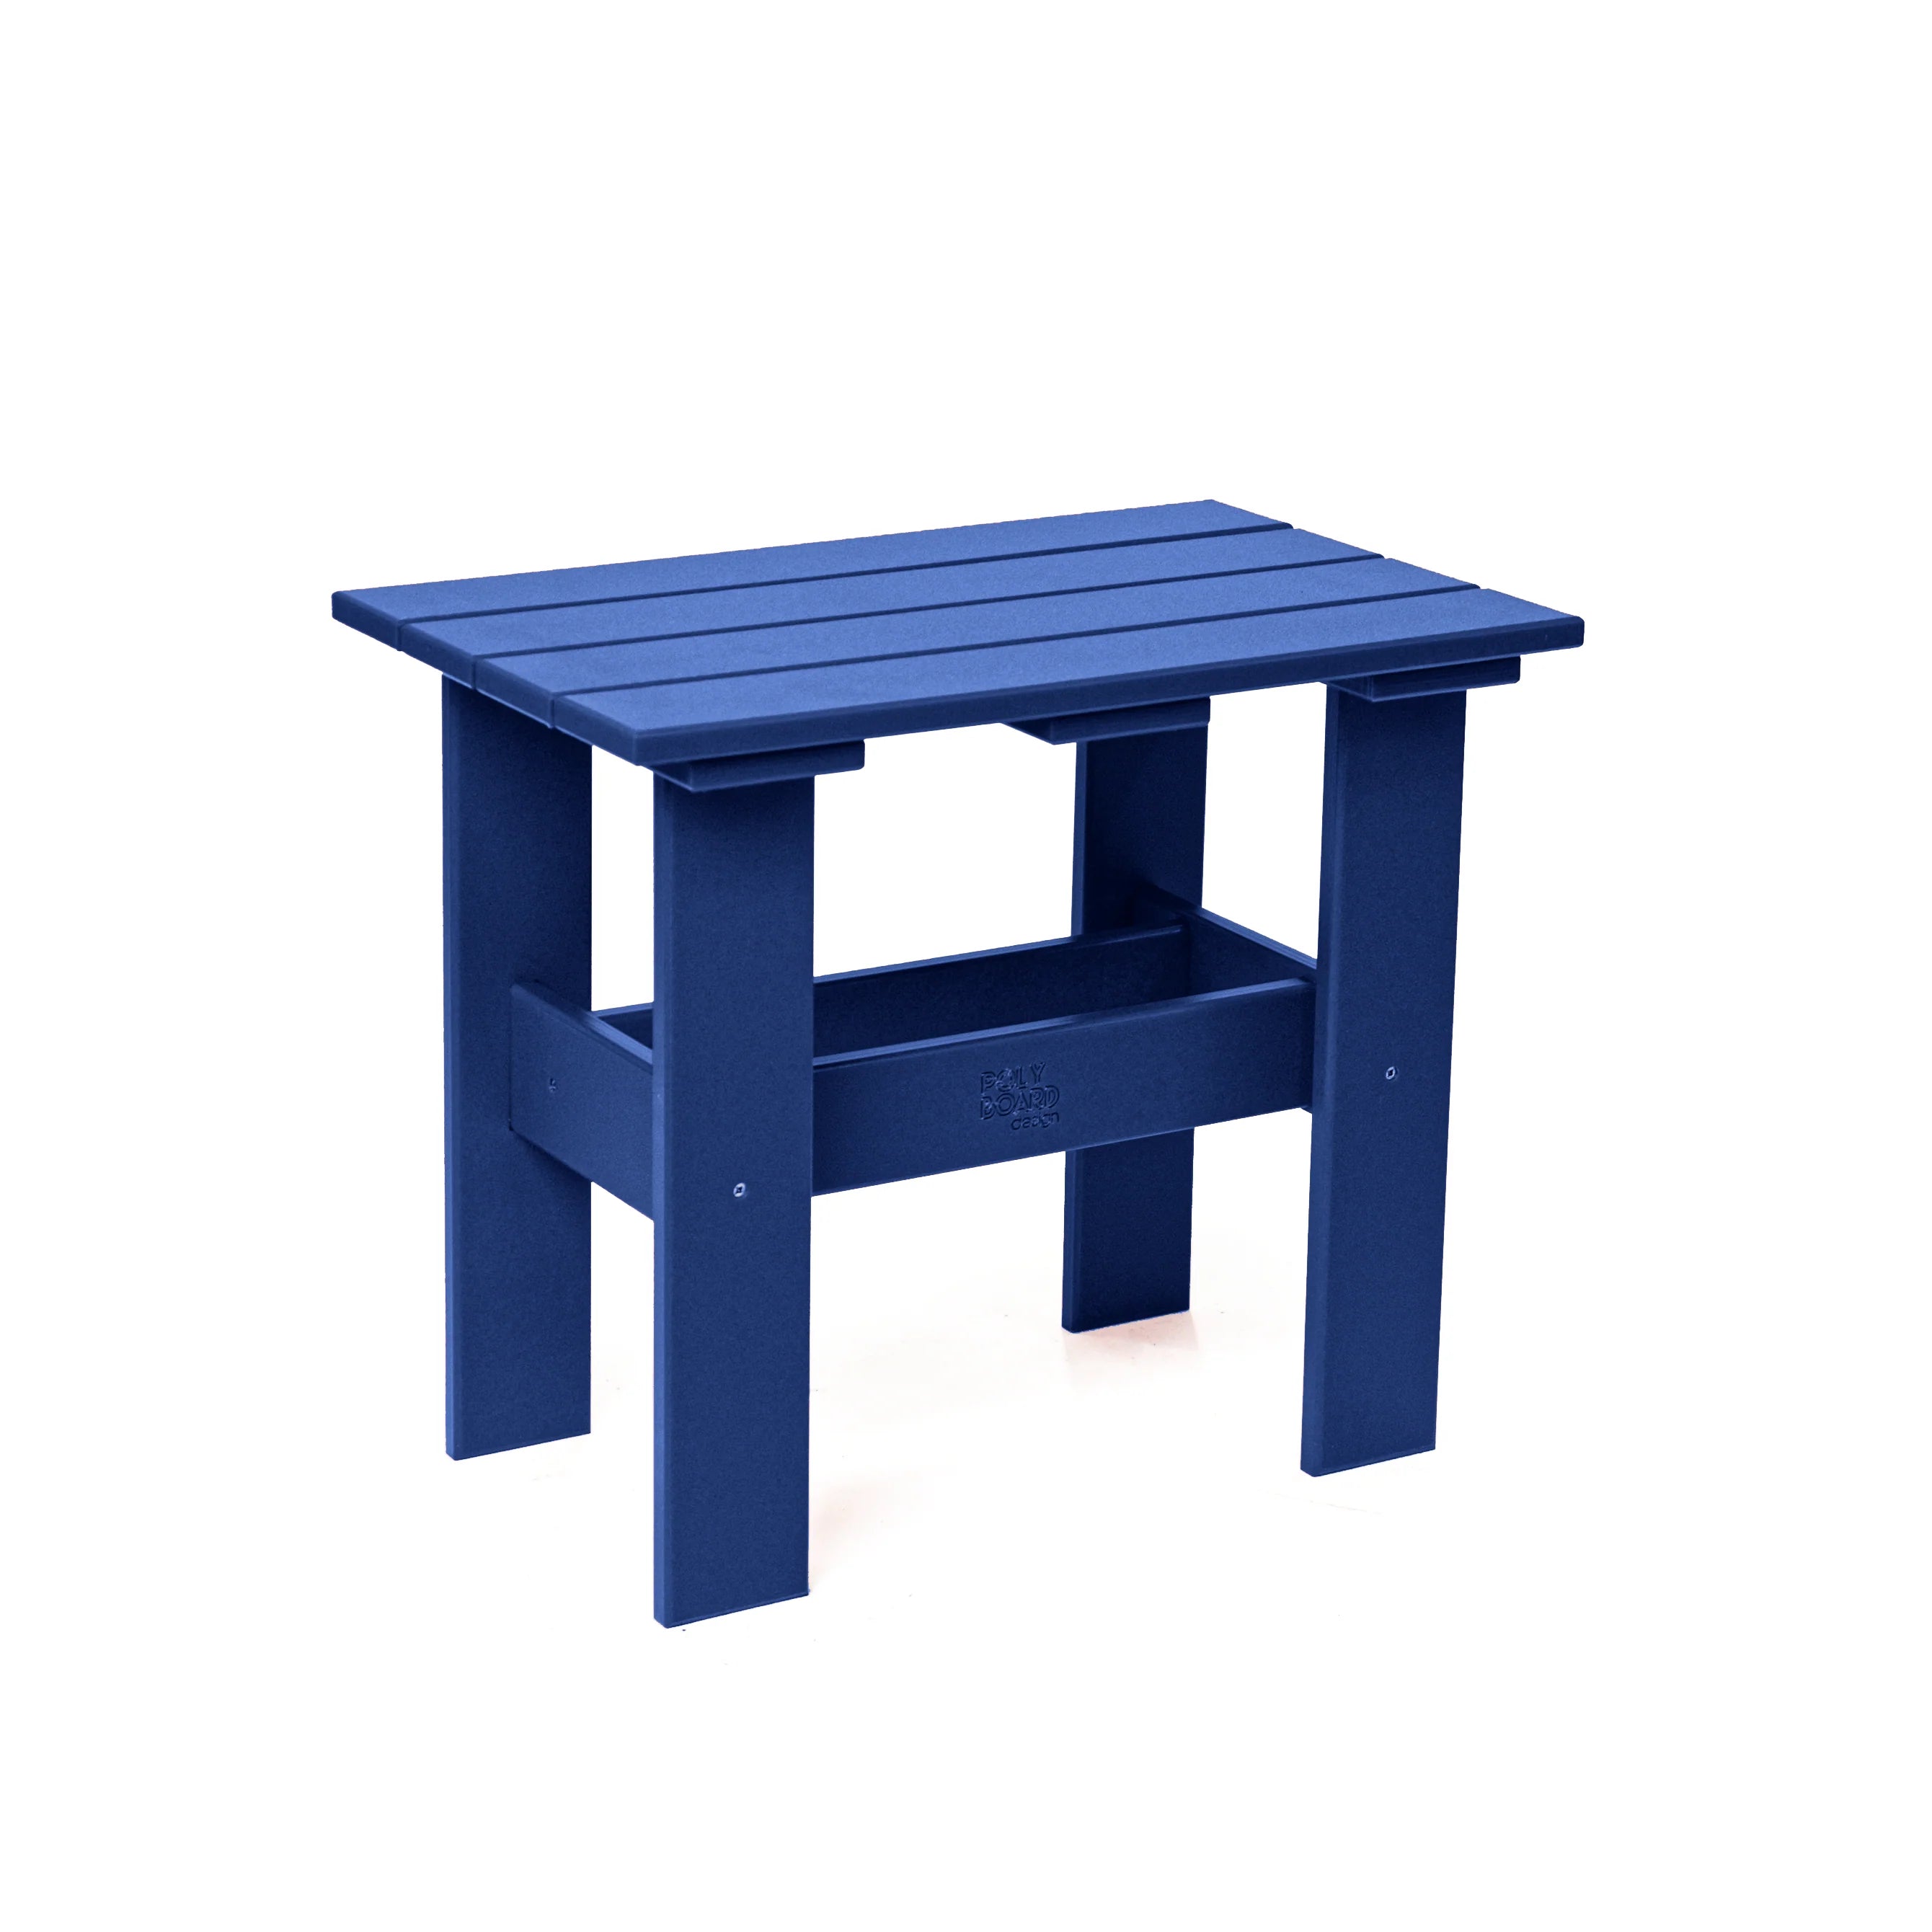 Muskoka Chair Side Table